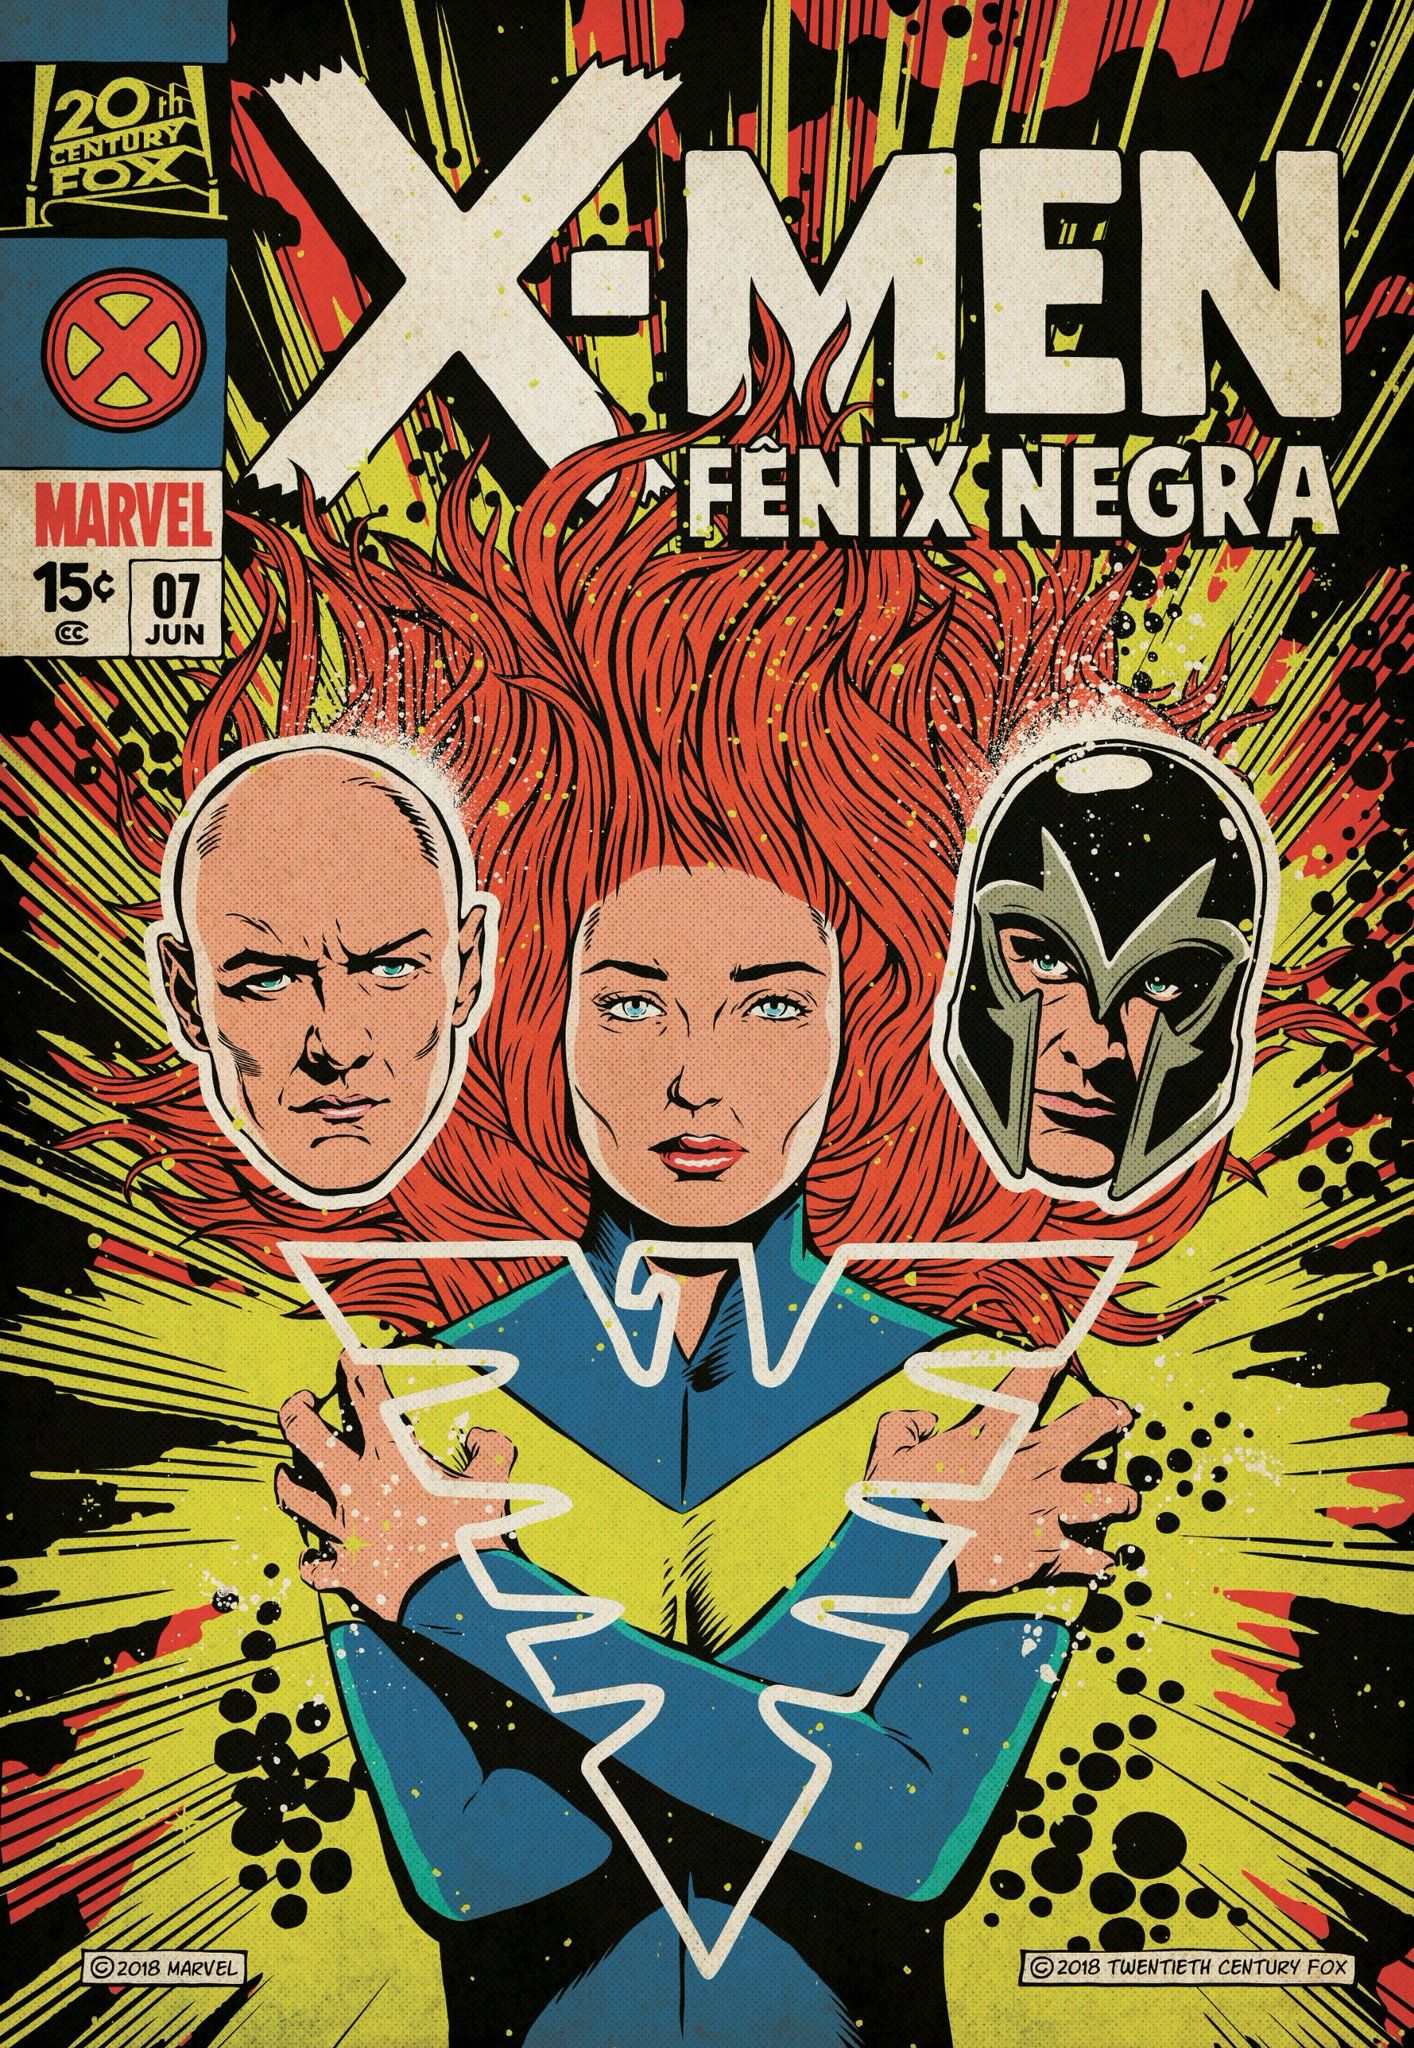 x-men-dark-phoenix-retro-poster.jpg